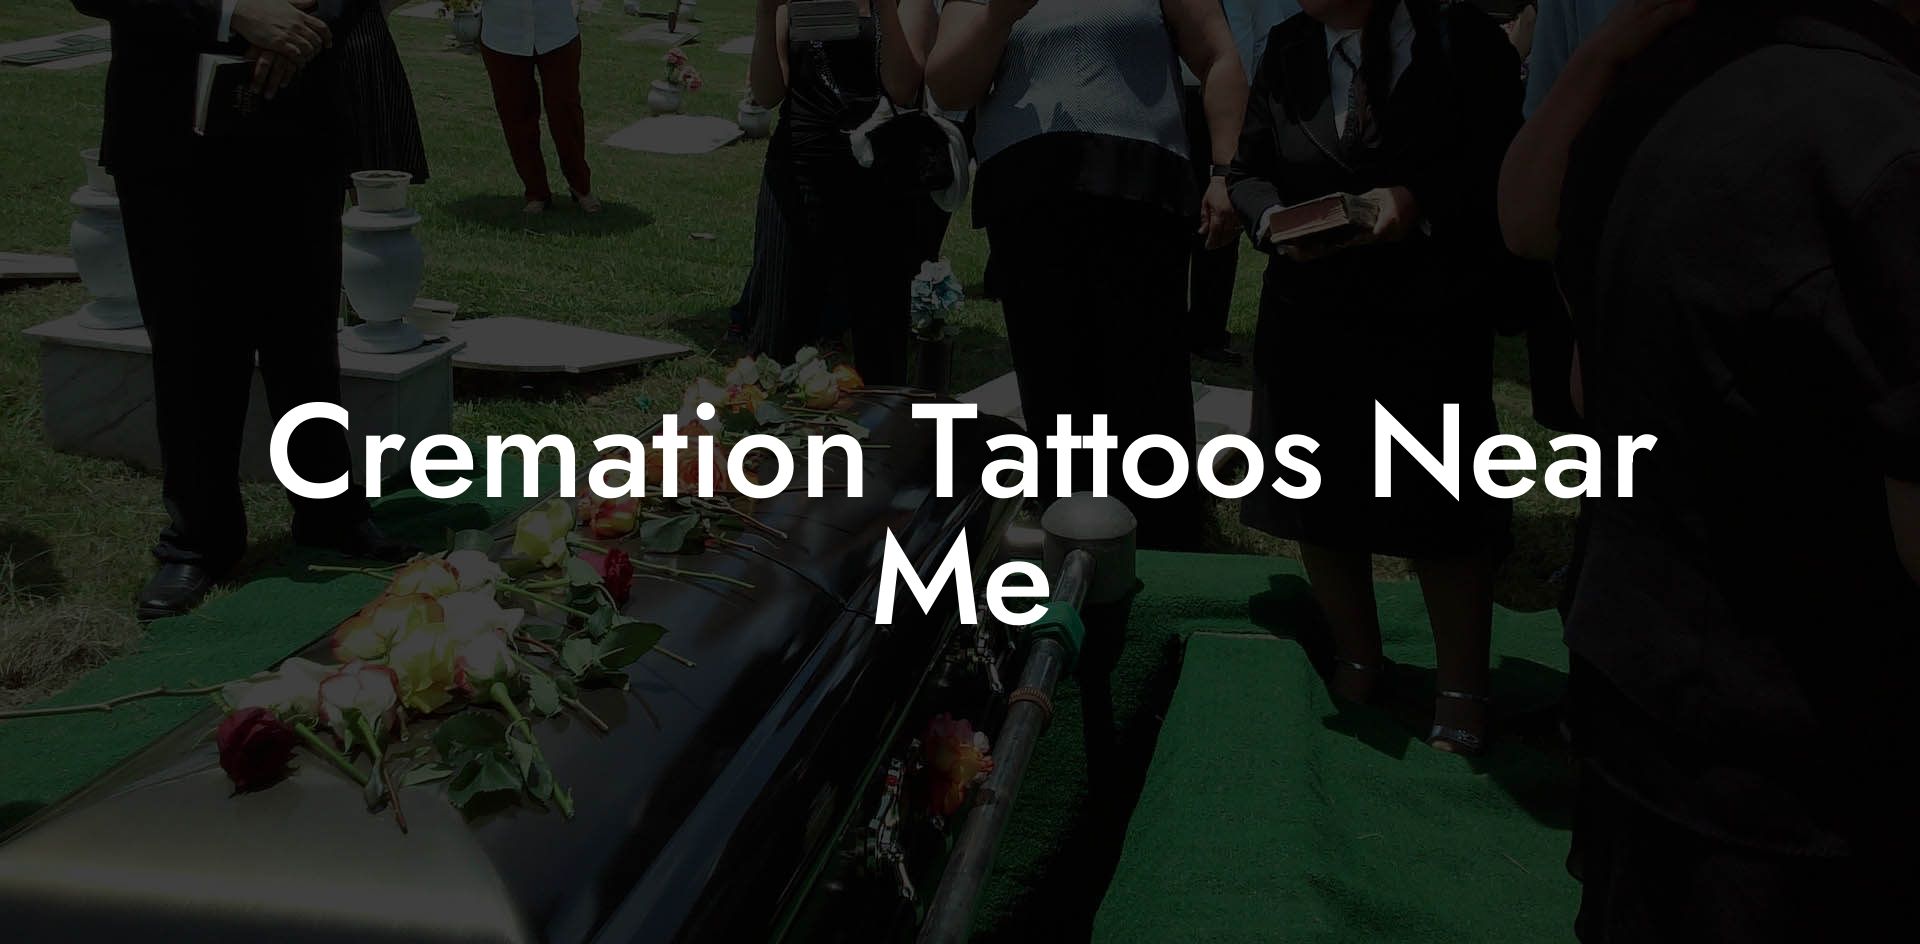 Cremation Tattoos Near Me